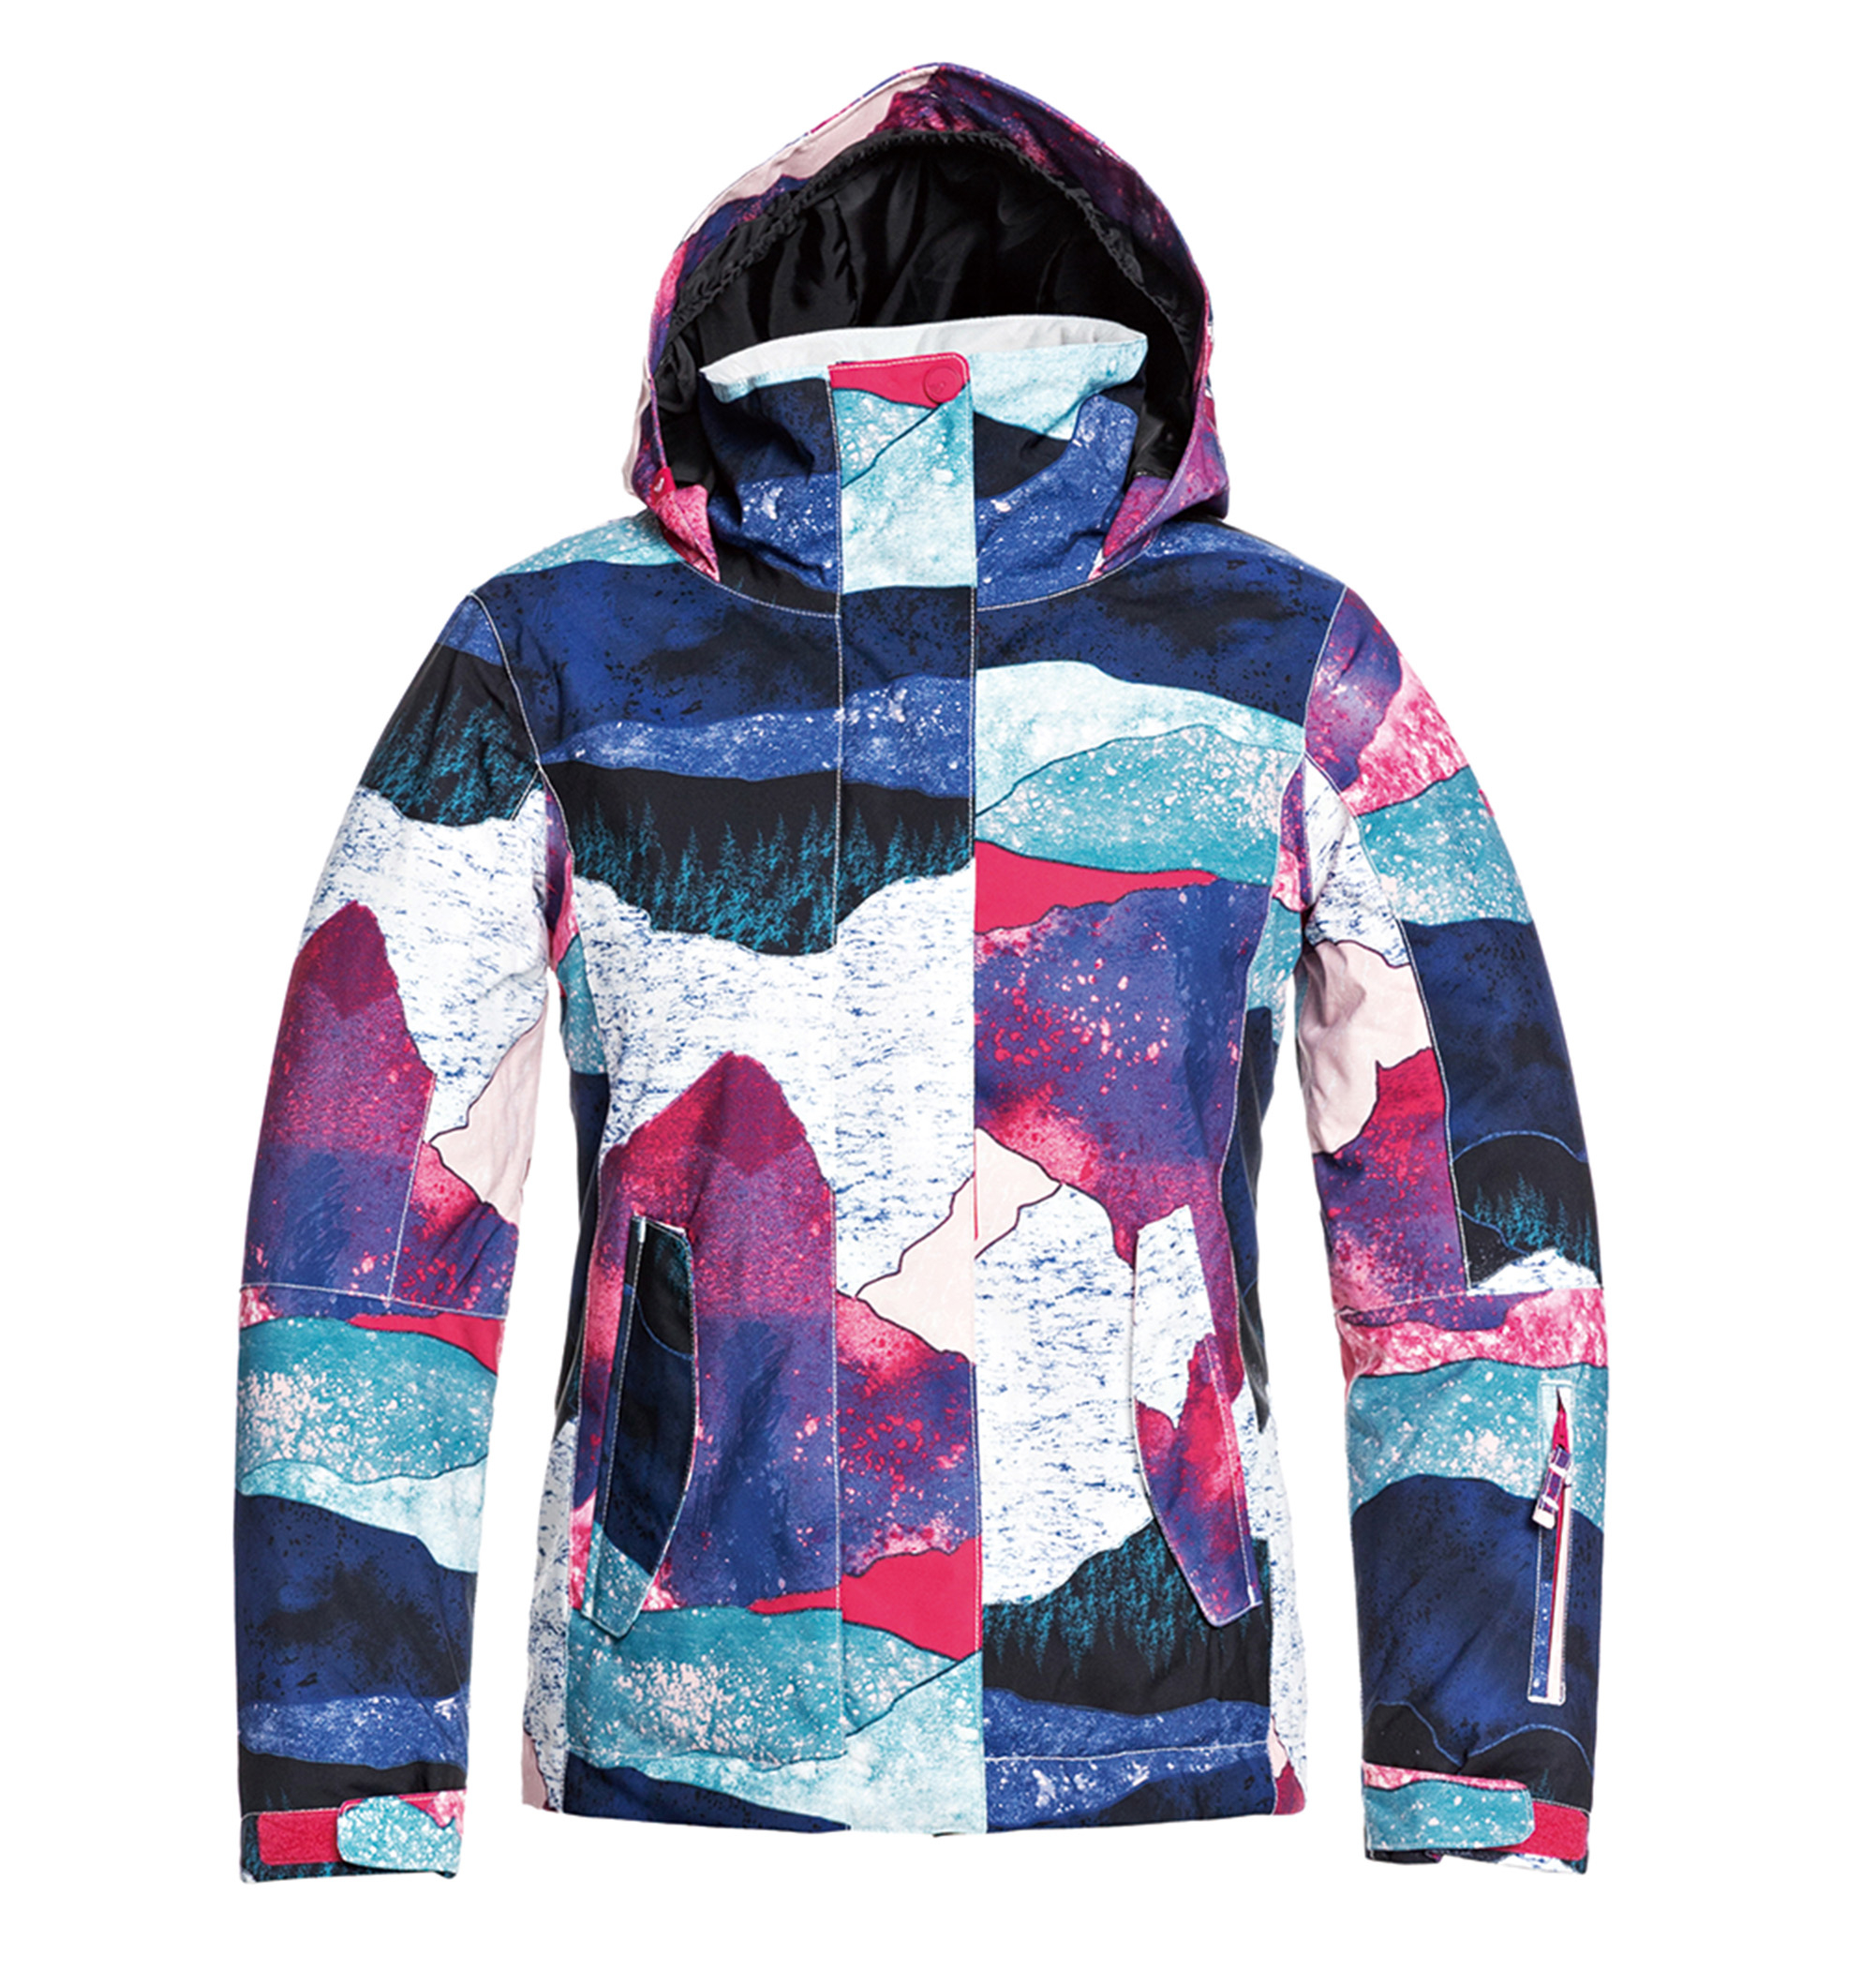 30%OFF！ROXY JETTY GIRL JK 色彩豊かなプリント柄がゲレンデに映えるスキージャケットの画像